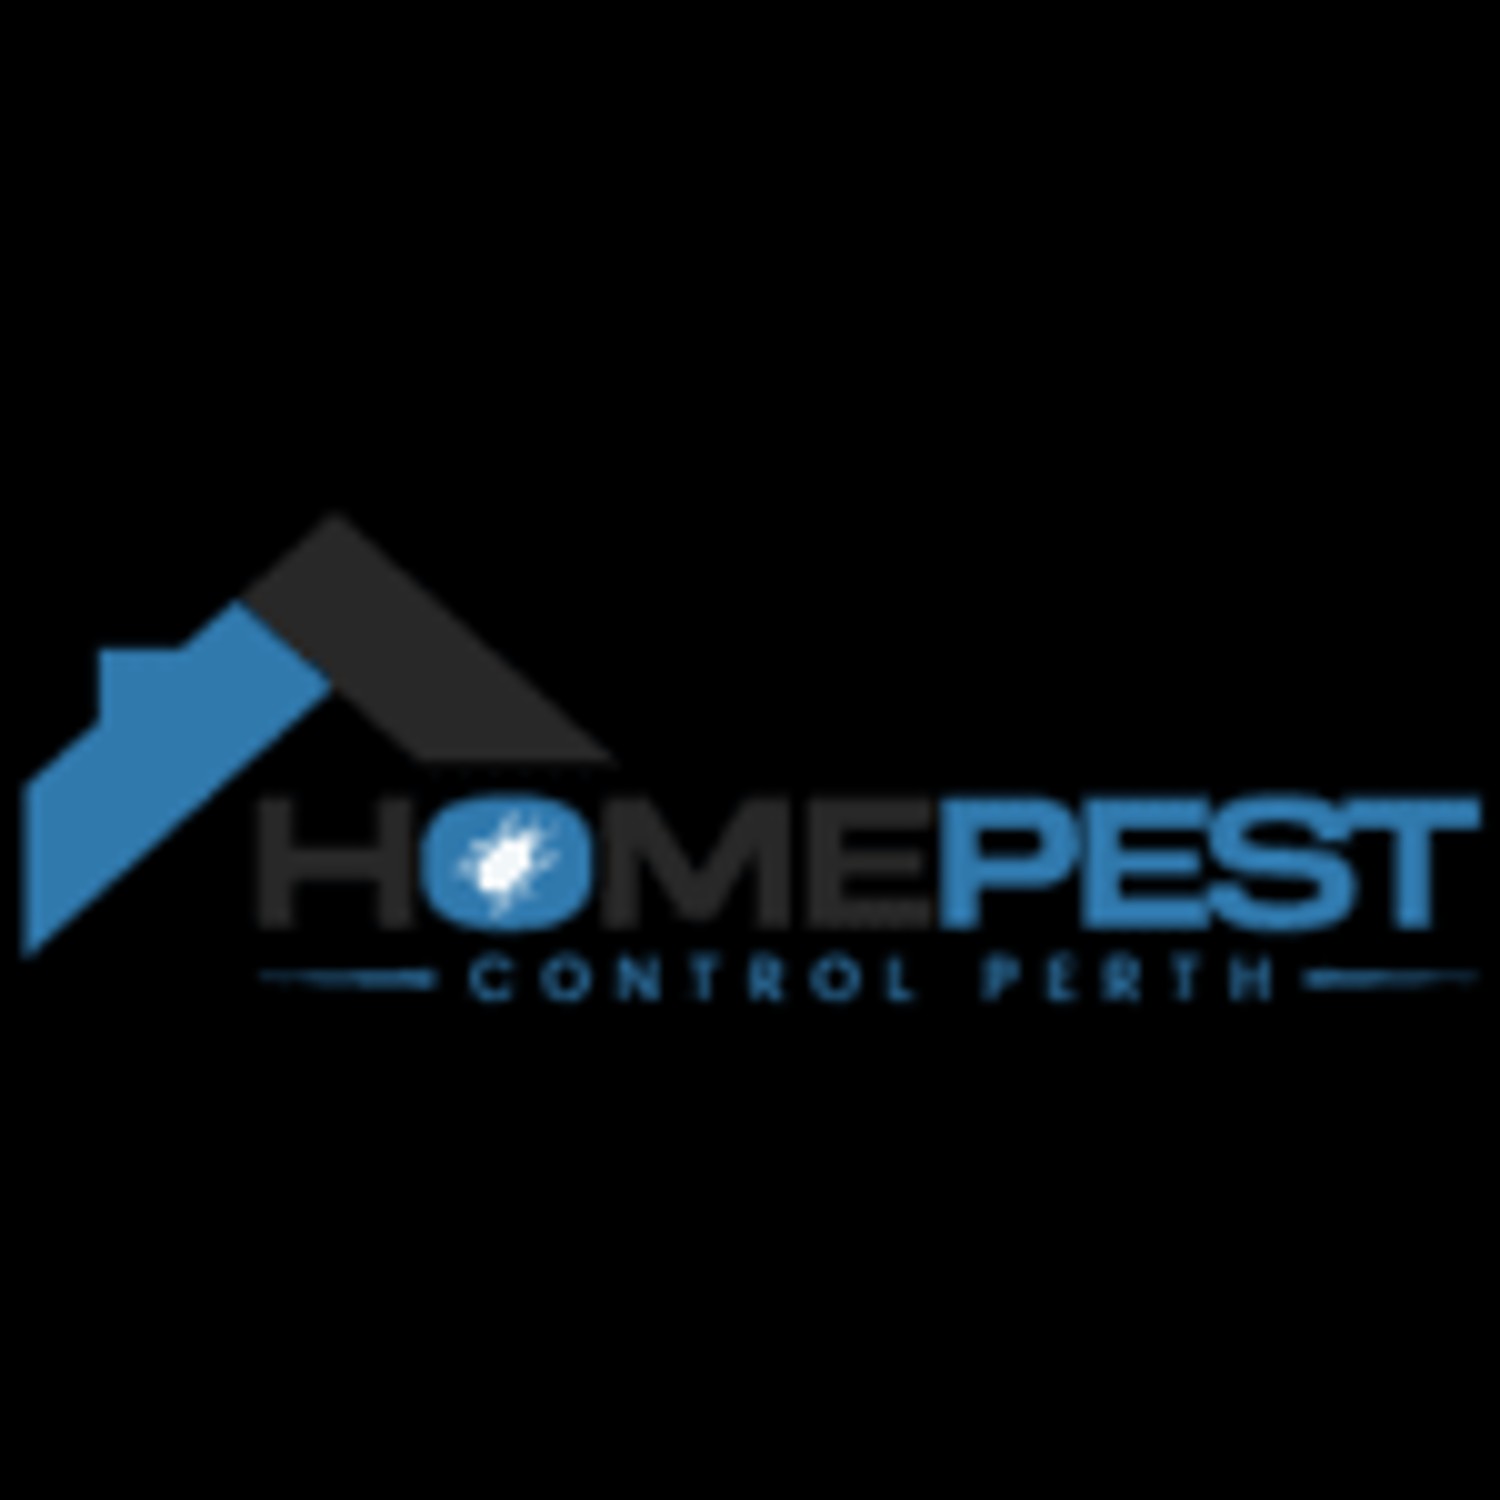 Home Pest Control Perth